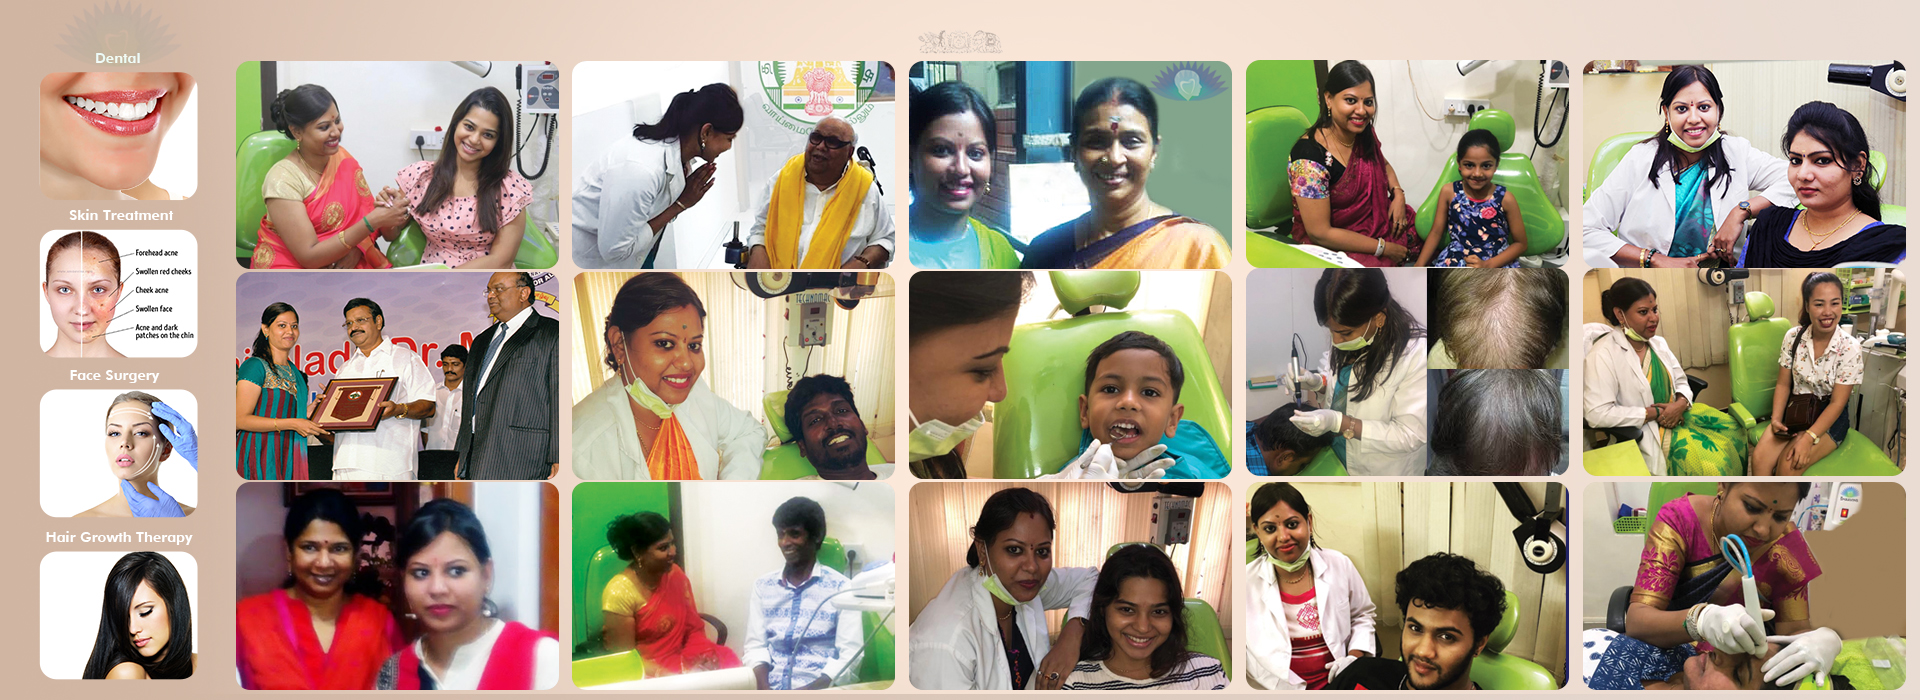 Smaavins best Cosmetic care hospital, for vip and cebraties in chennai, kk nagar, annanagar, ashok nagar